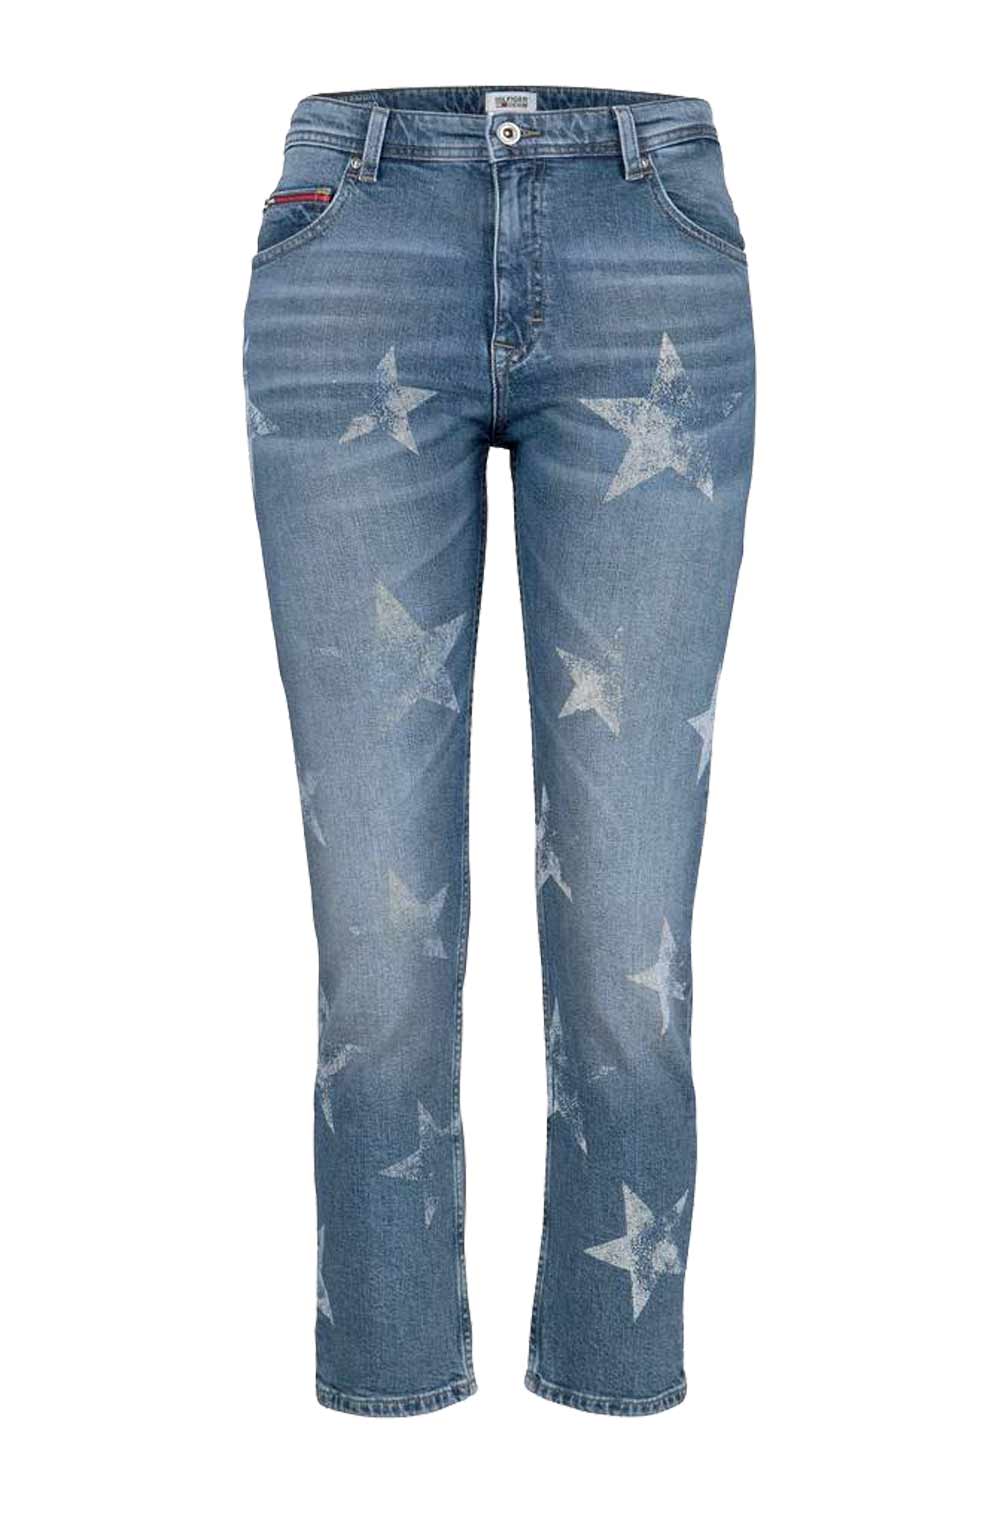 Tommy Hilfiger Denim Damen Marken-Jeans "LANA", blau-used